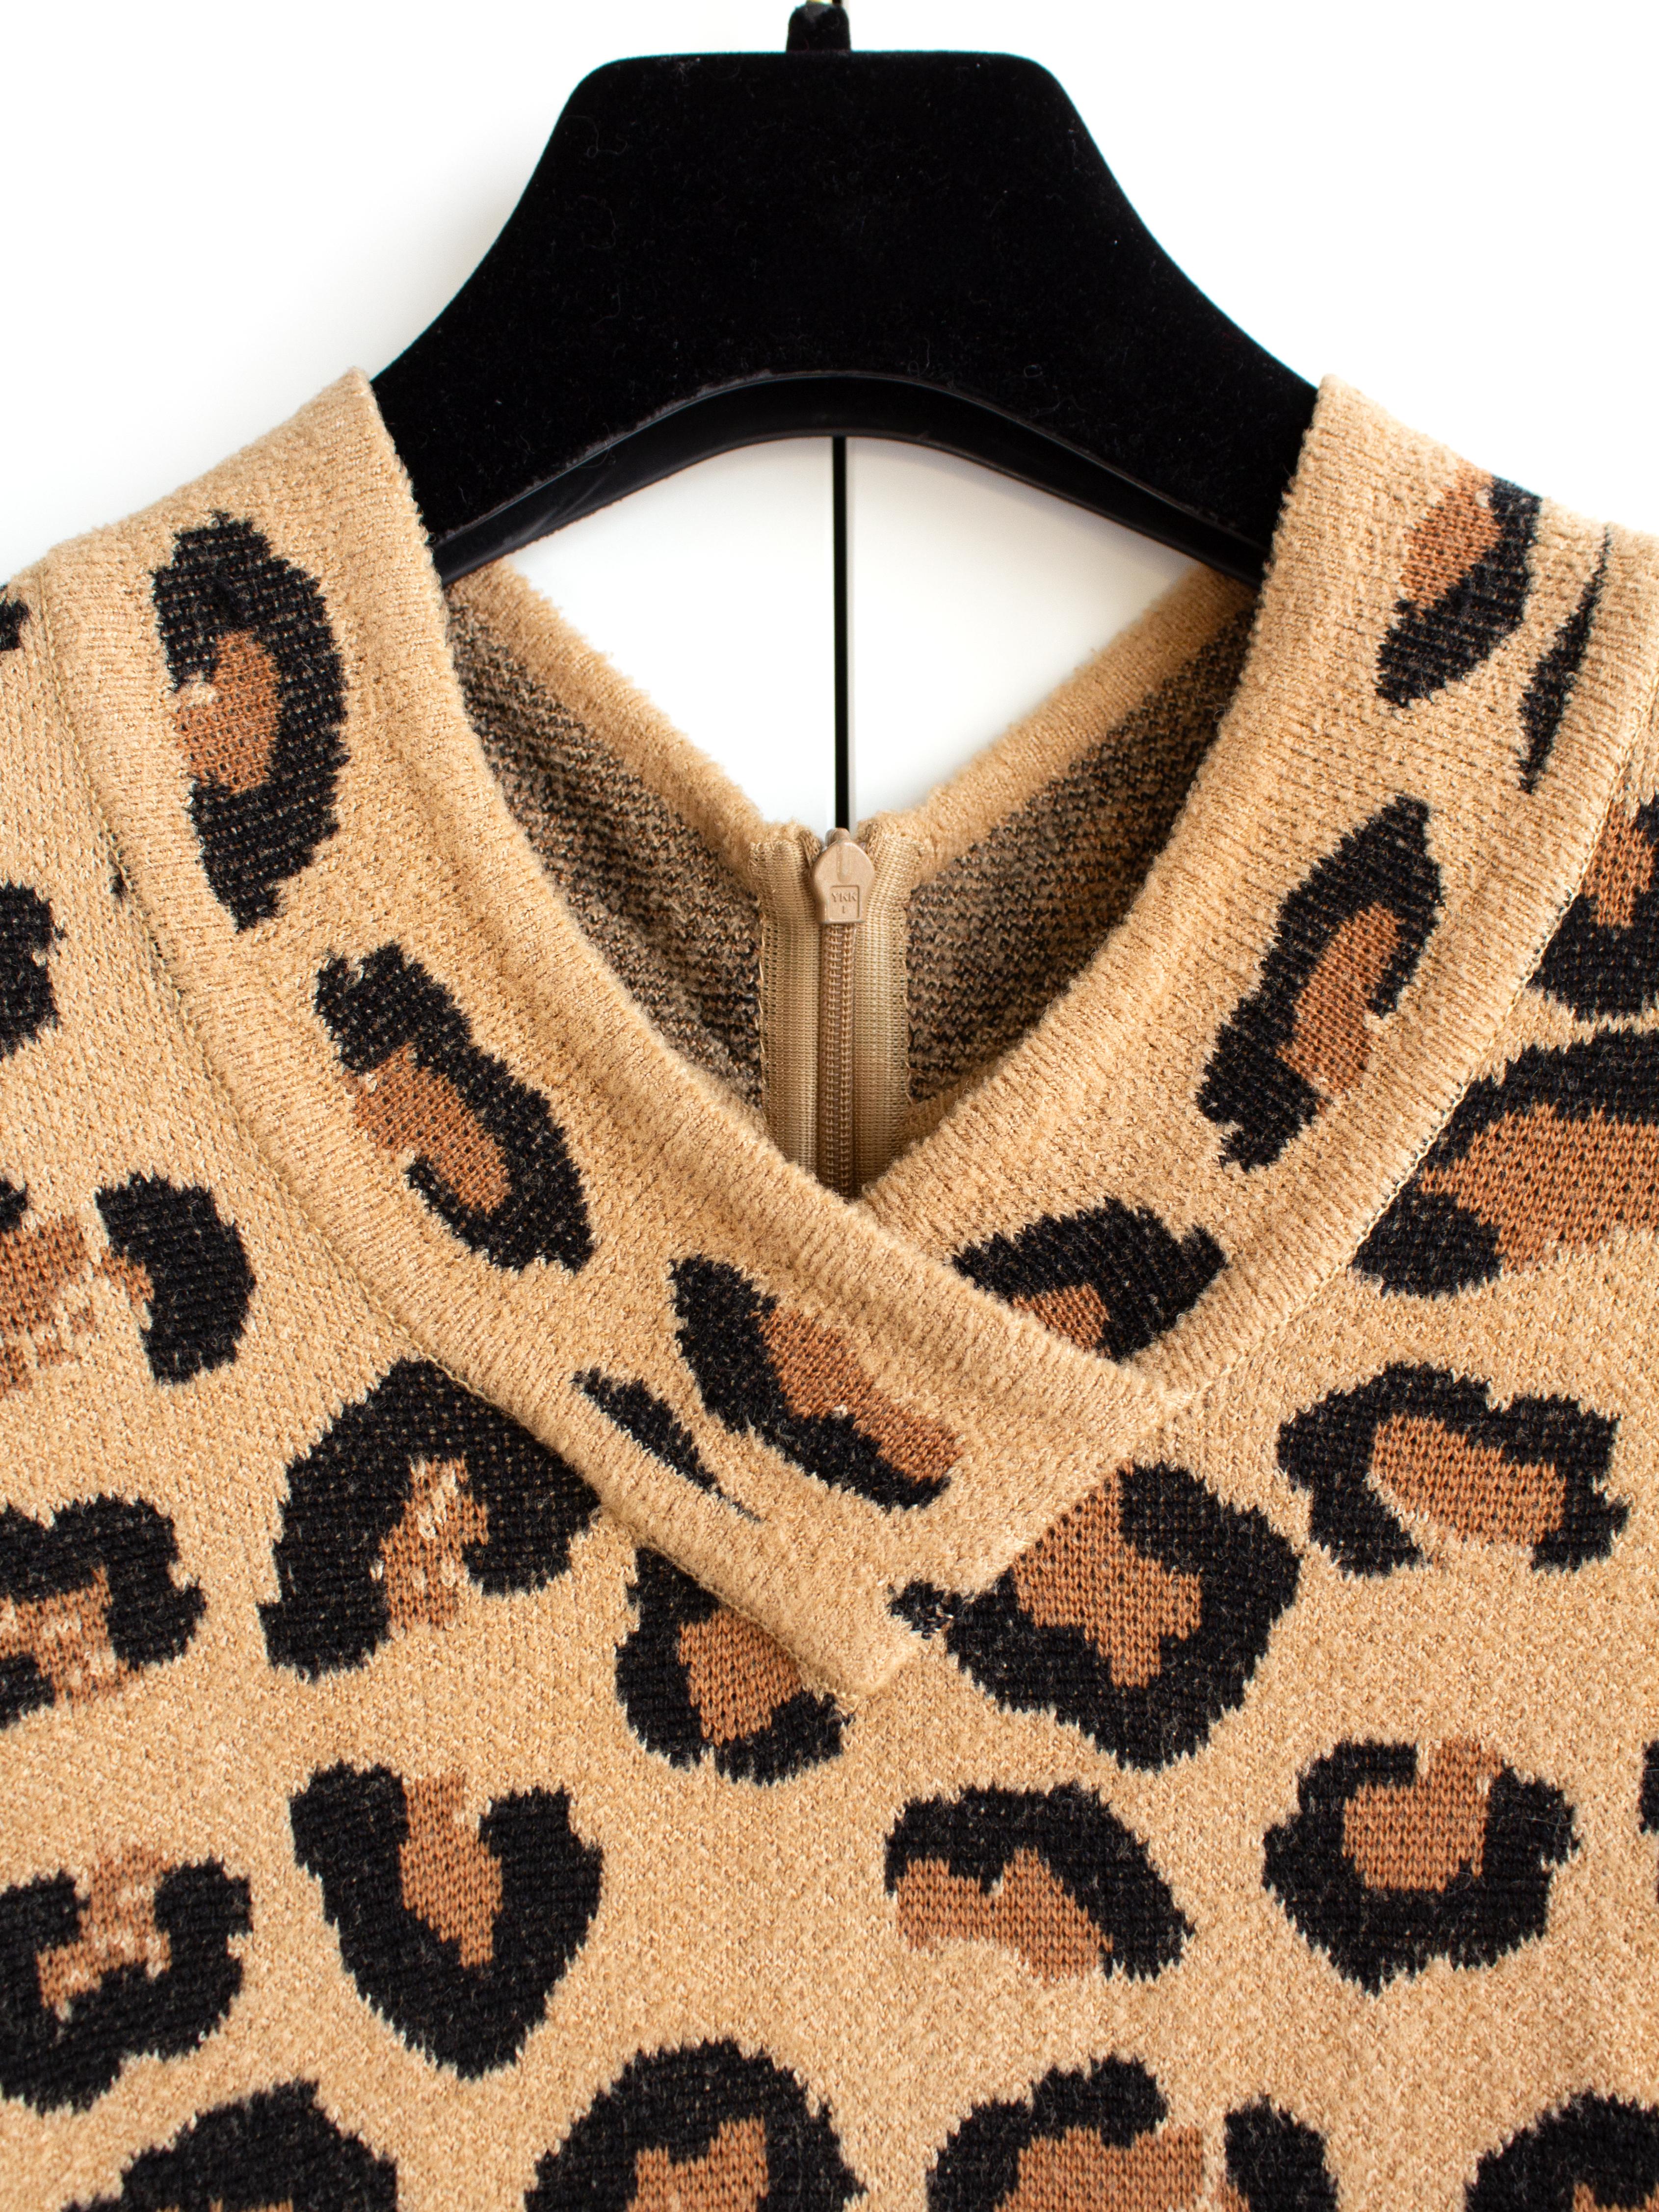 Iconic Alaia Vintage Fall/Winter 1991 Leopard Print Knit Bodycon Dress 7